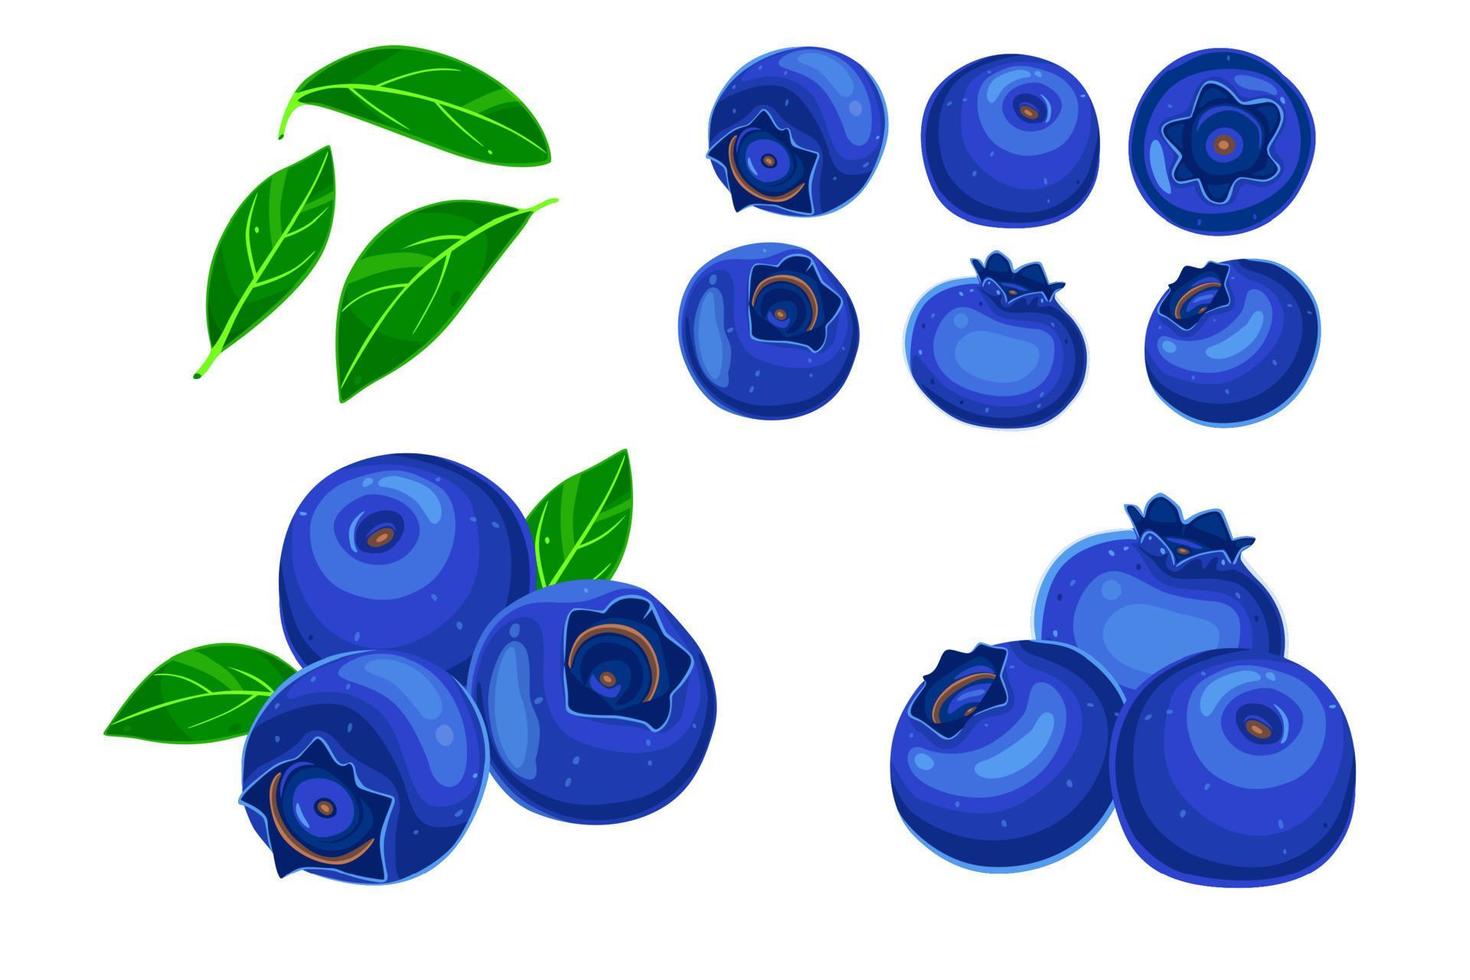 blueberry Isolated on white background. Eps10 vector illustration.